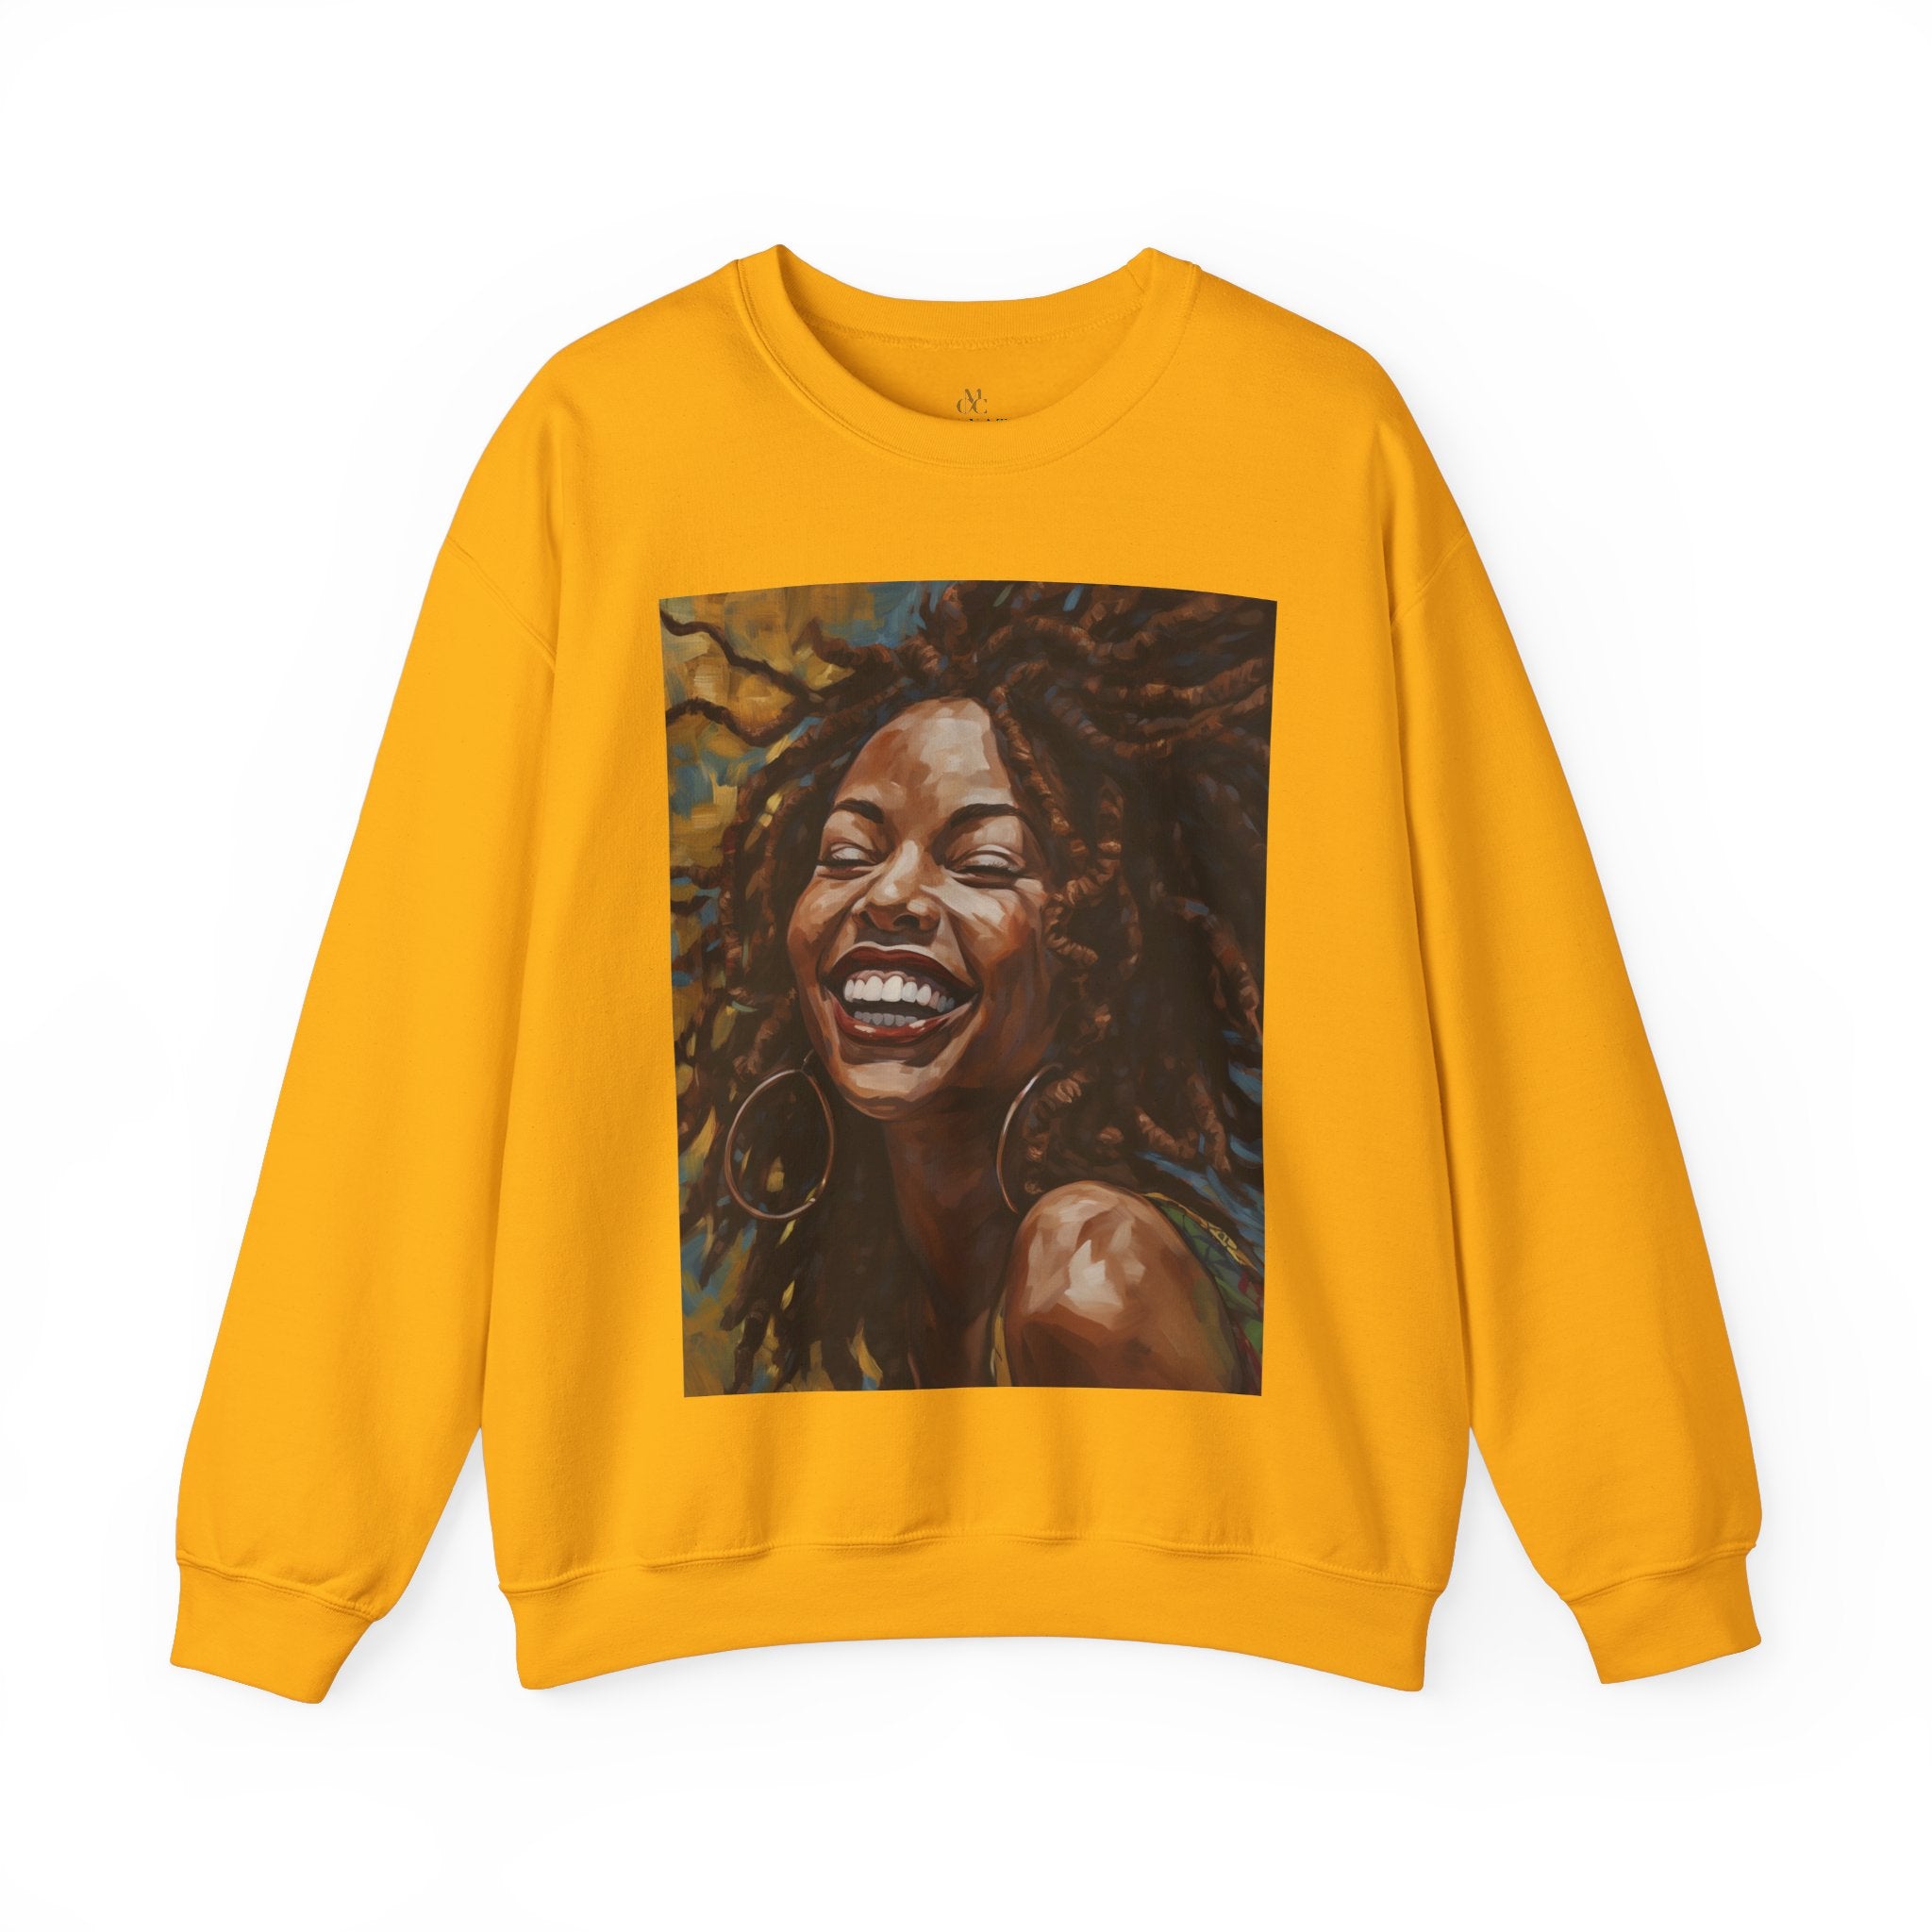 Afro Locs Girl sweatshirt in gold.